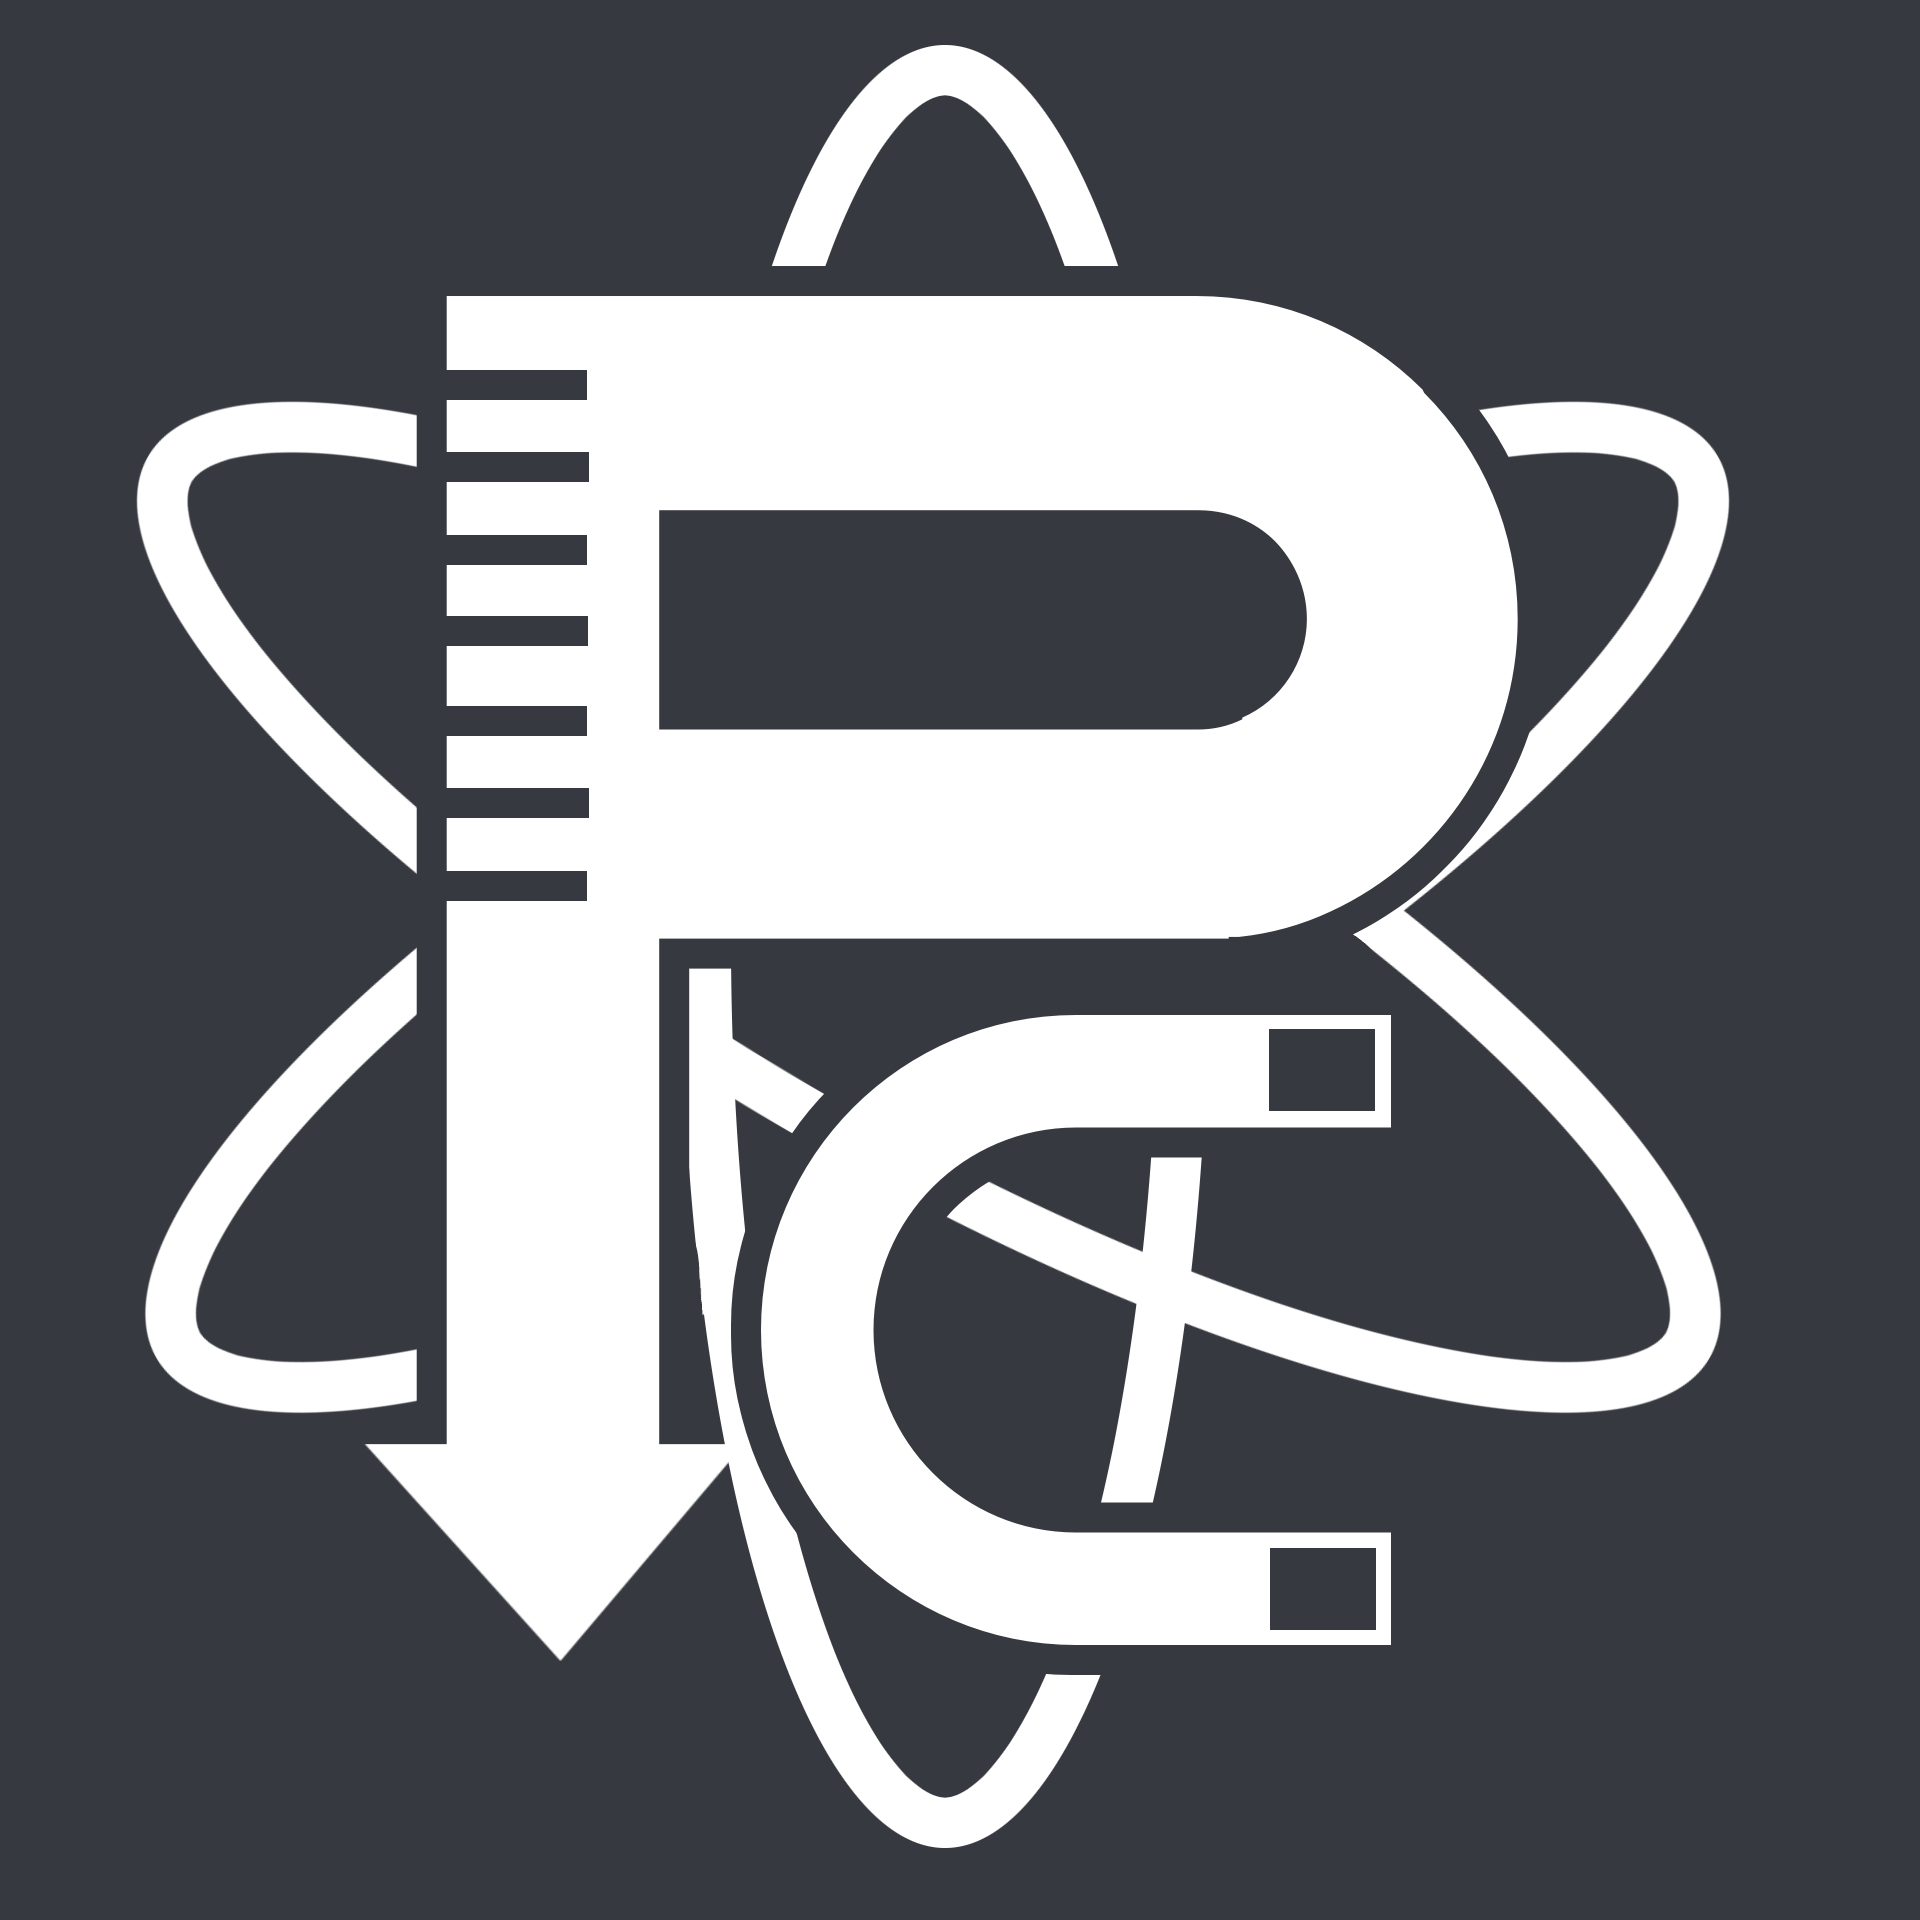 Physics Club logo